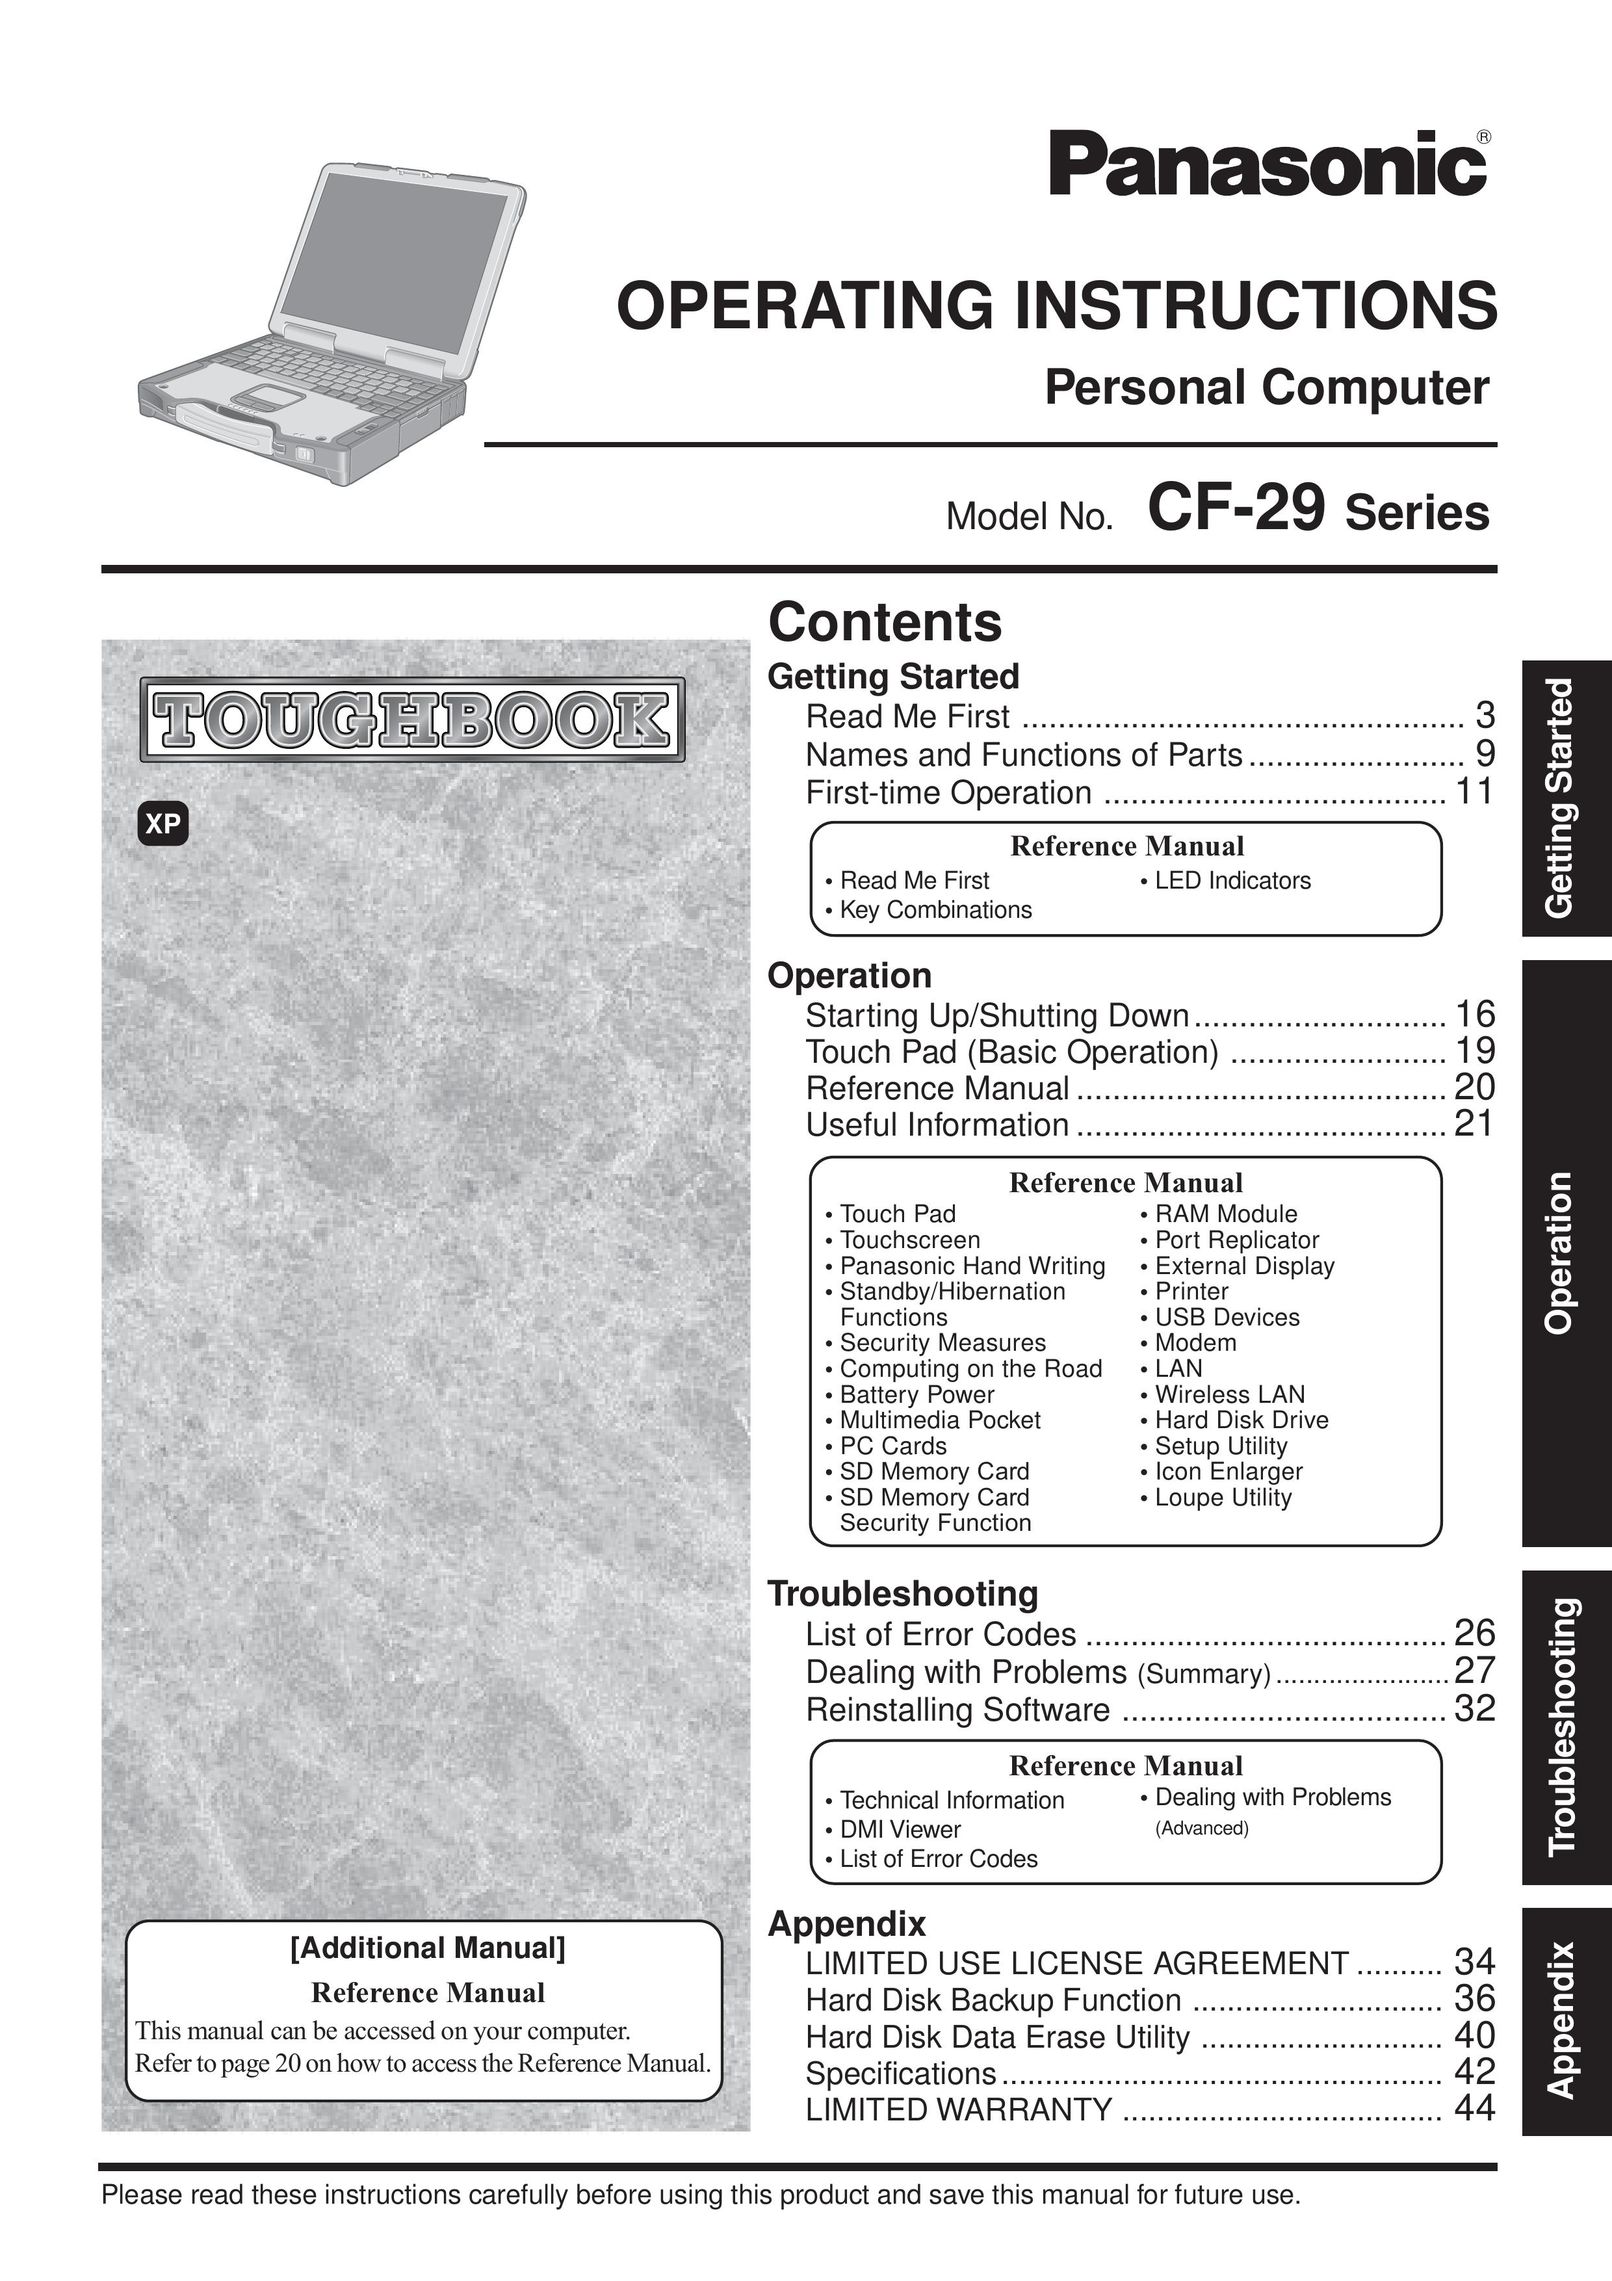 Panasonic CF-29 Series Laptop User Manual